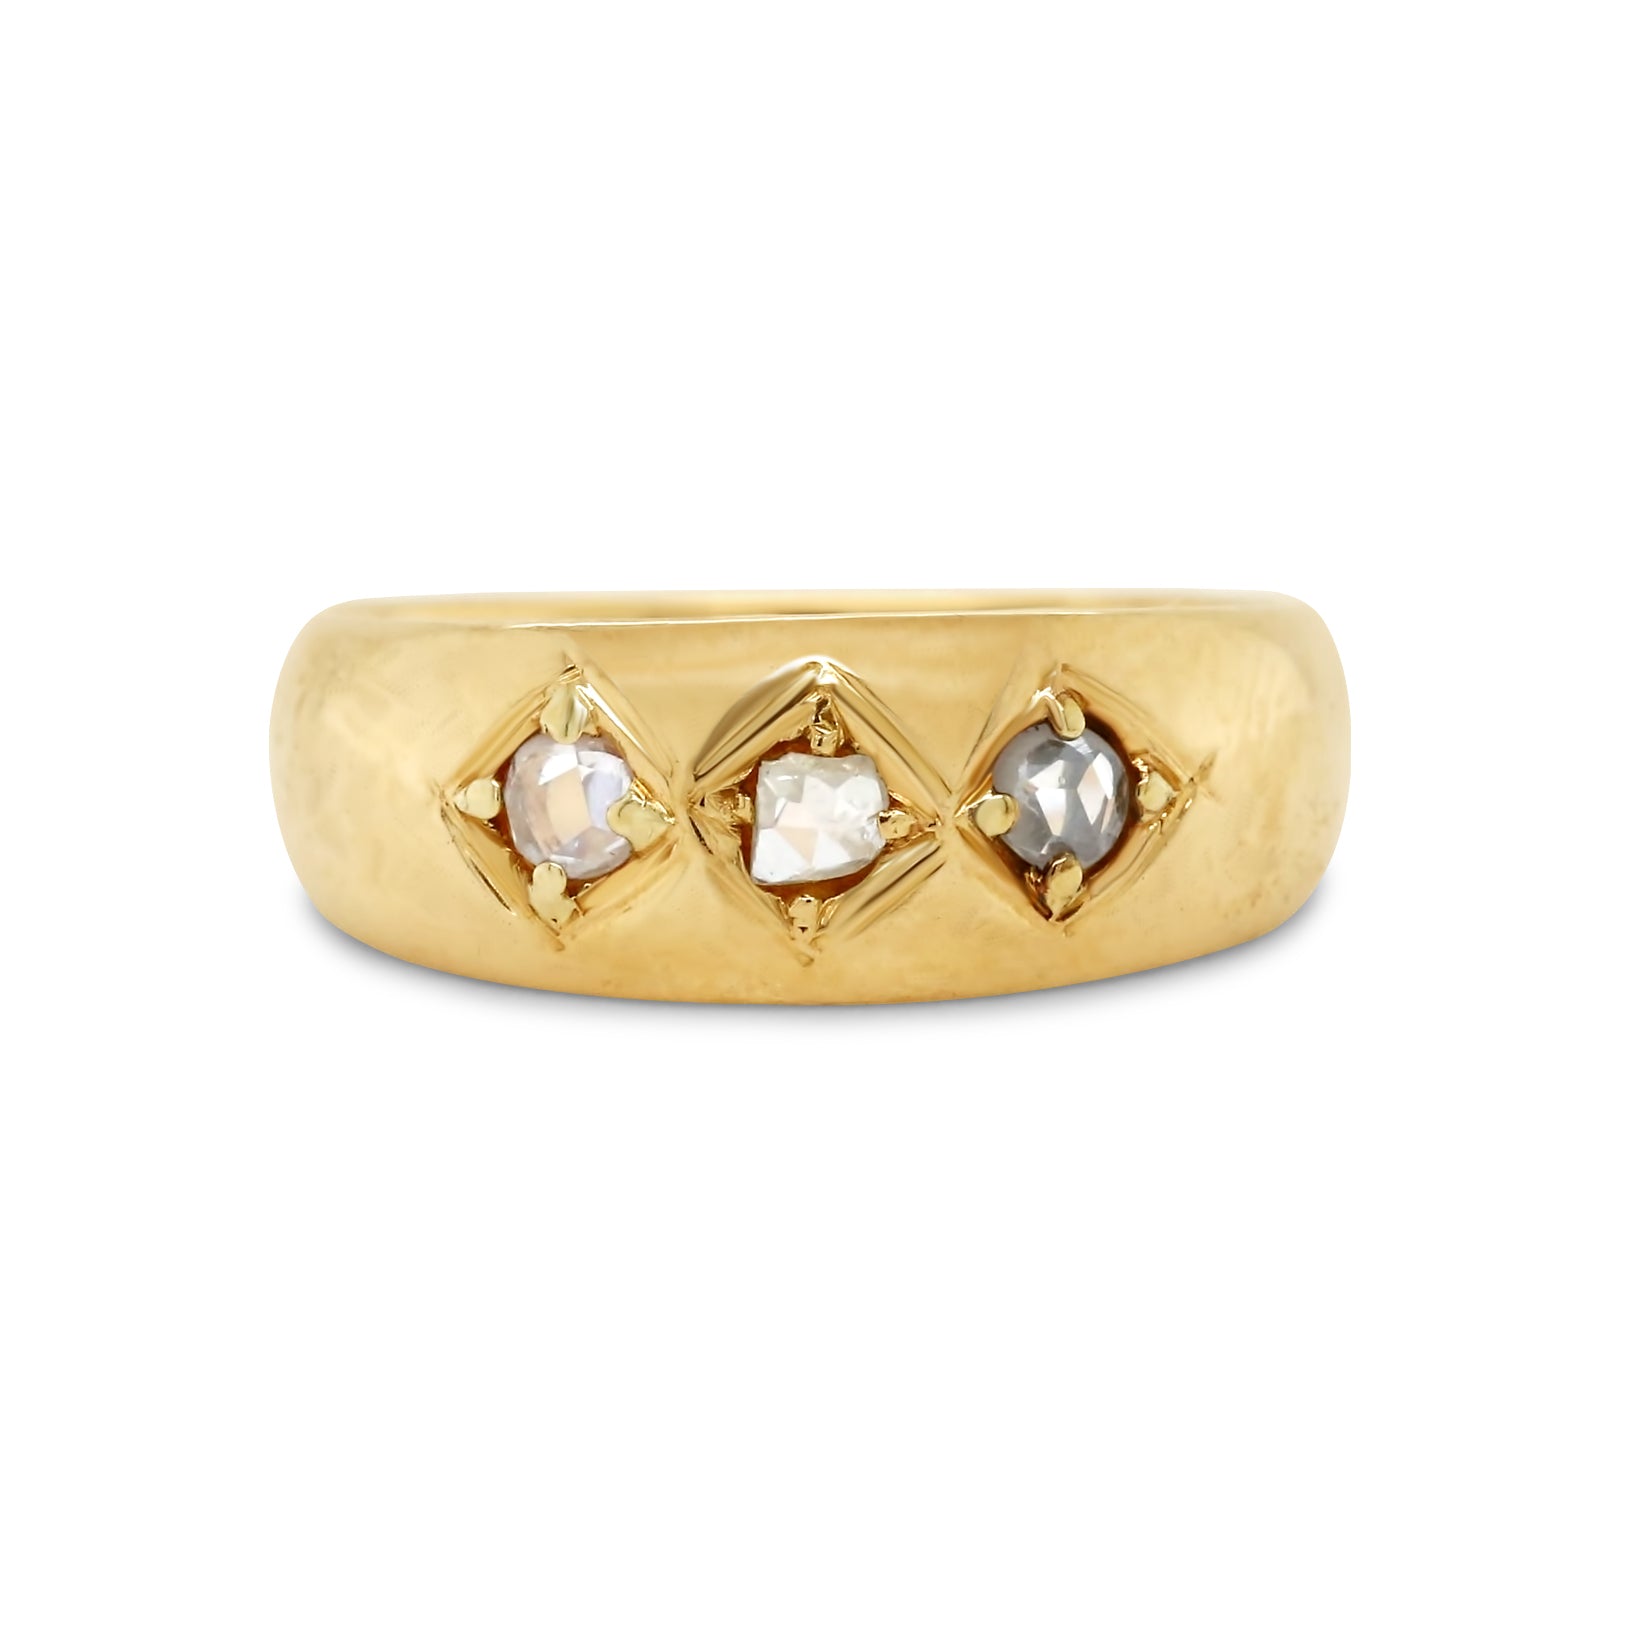 18k yellow gold three rose cut diamonds chunky estate band ring